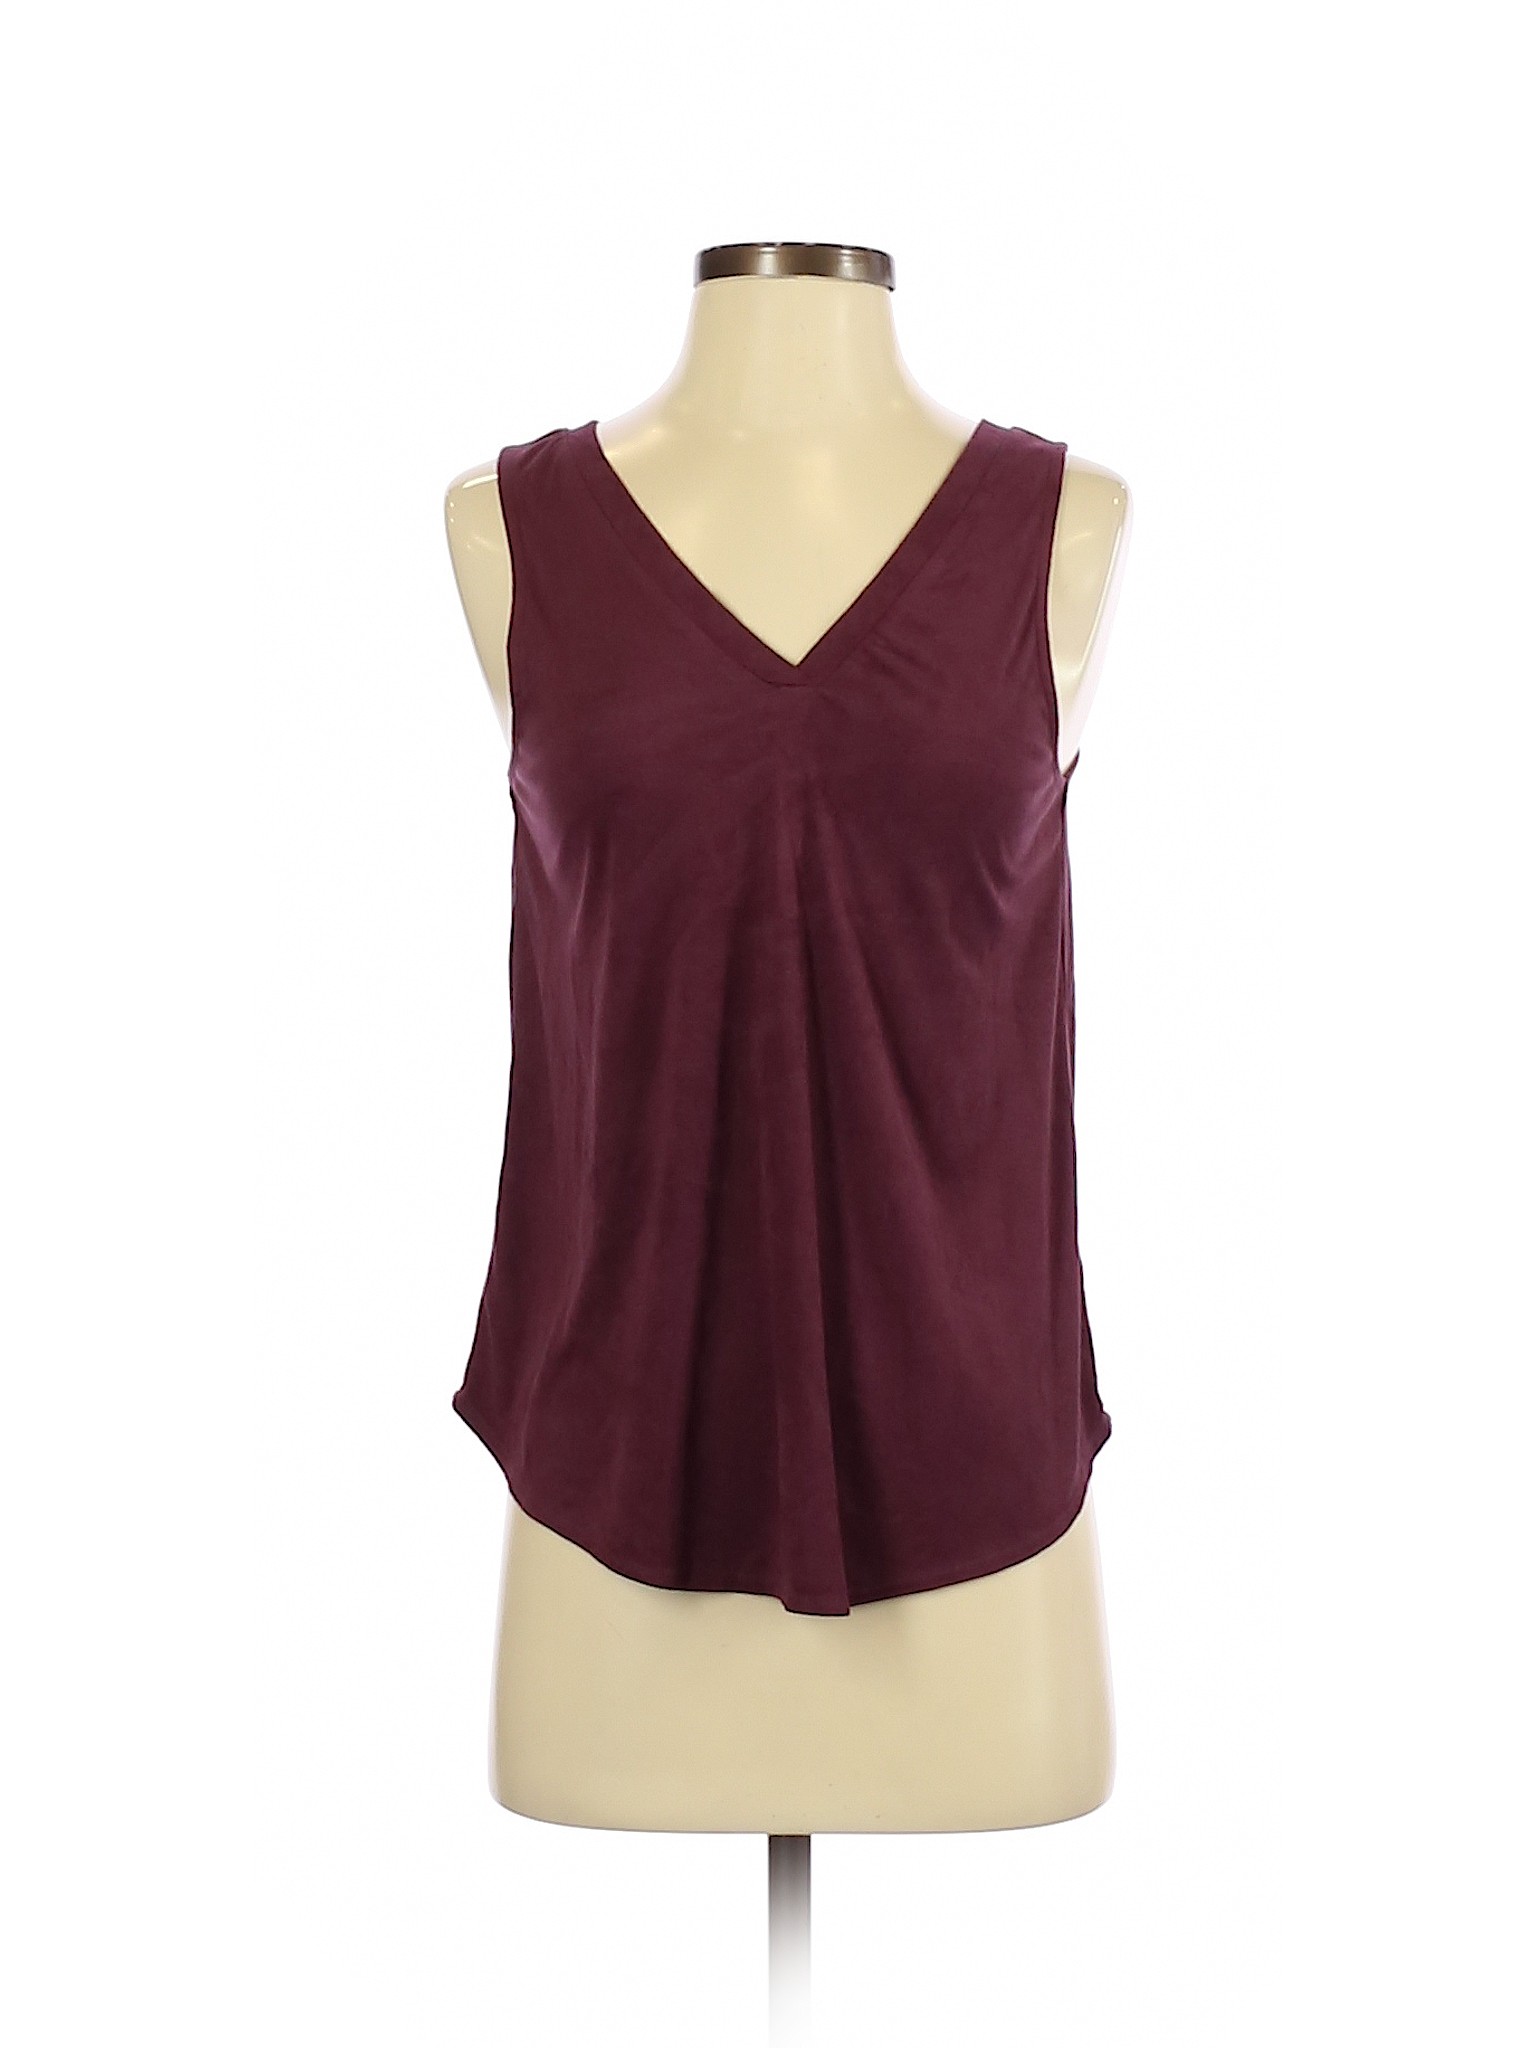 Grayson Threads Women Purple Sleeveless Top XS | eBay